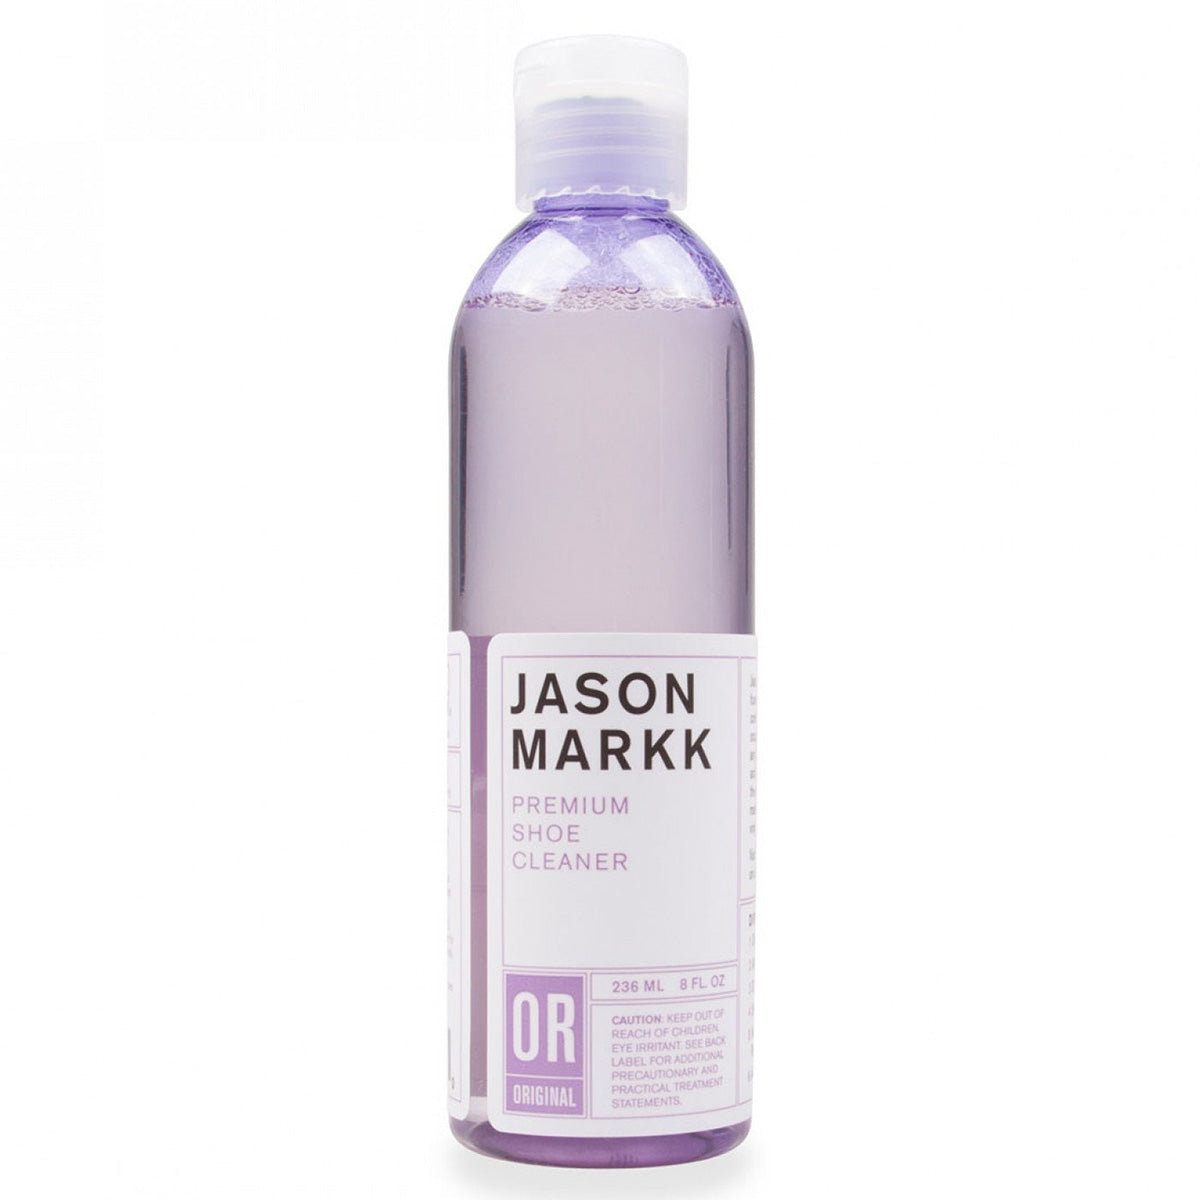 JASON MARKK PREMIUM SHOE CLEANER